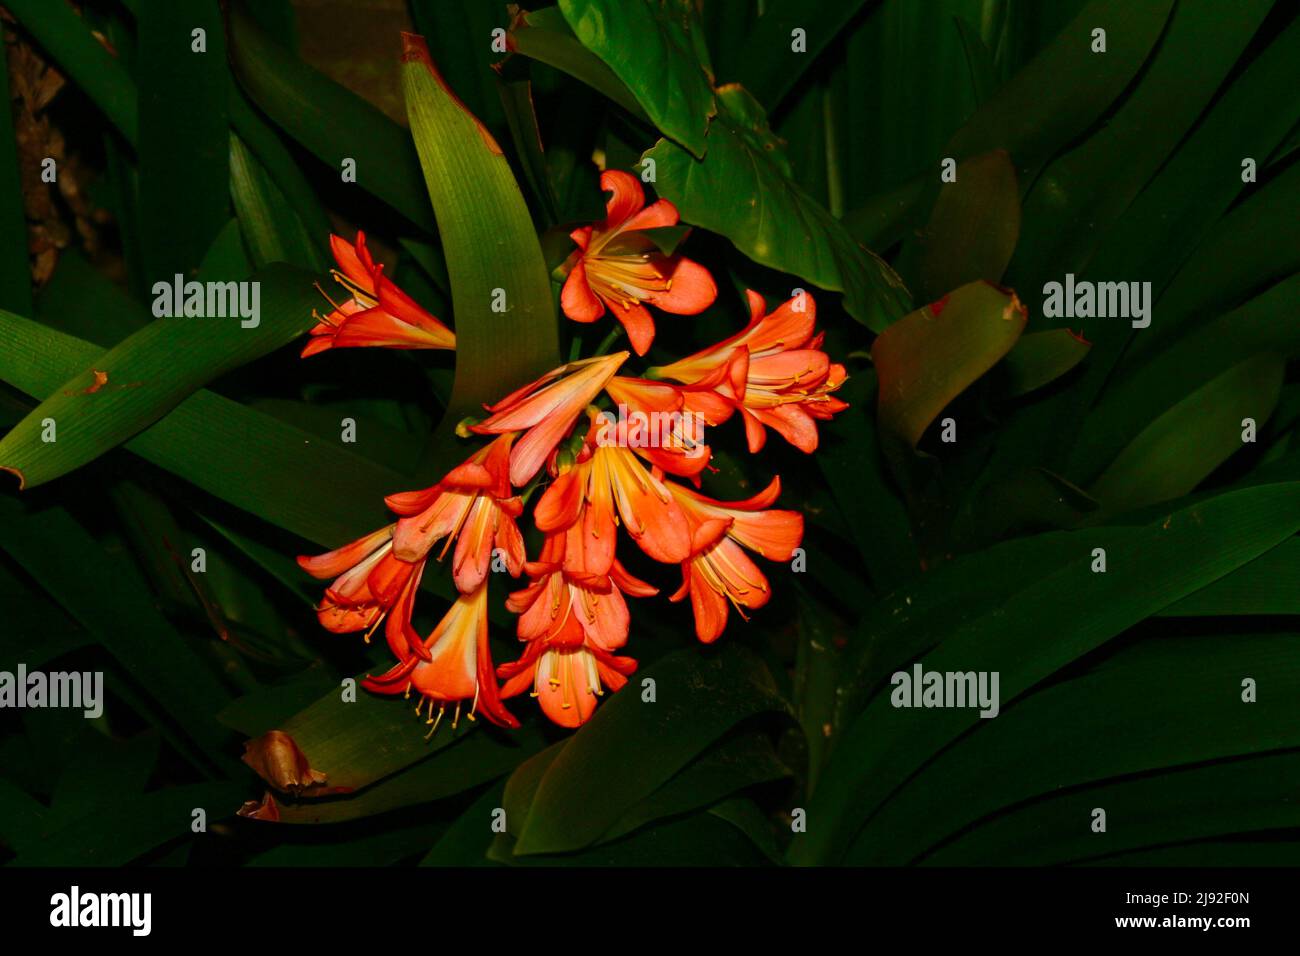 Orange flower bunch on plant Stock Photo